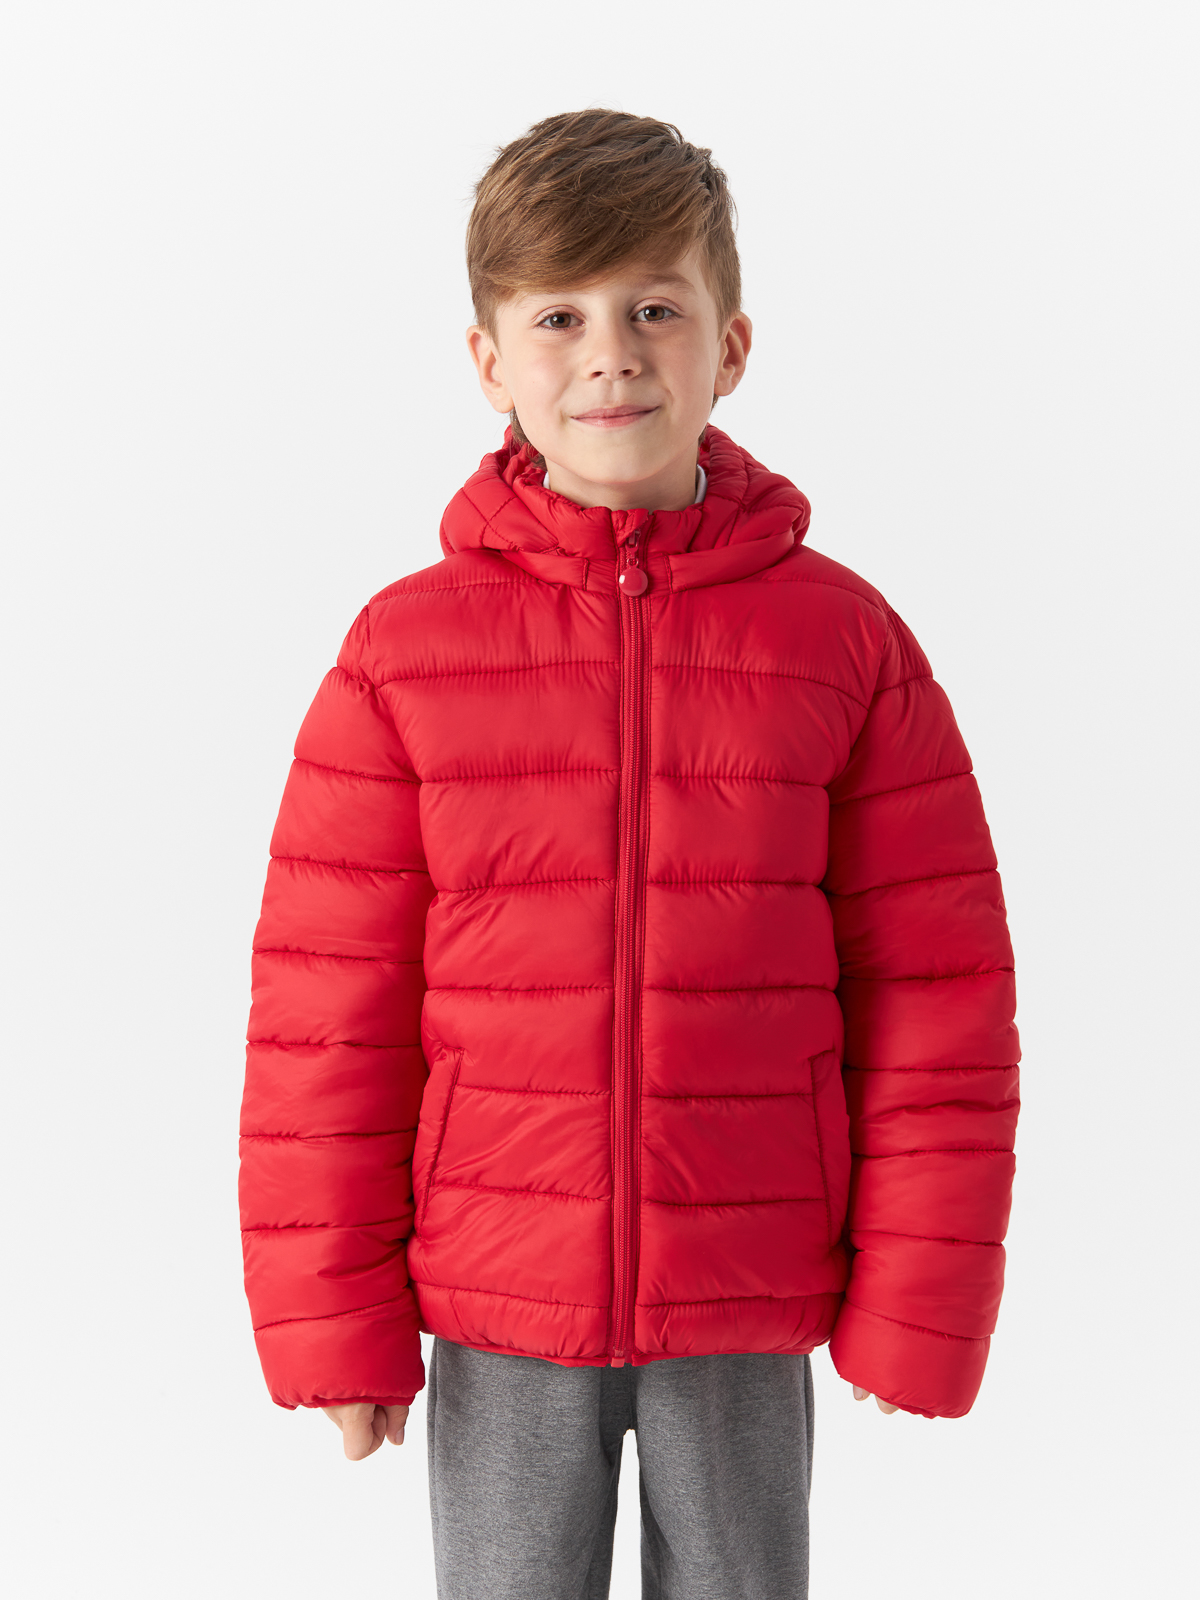 Куртка Mcstyles для мальчиков, размер 164, SMM10, красная